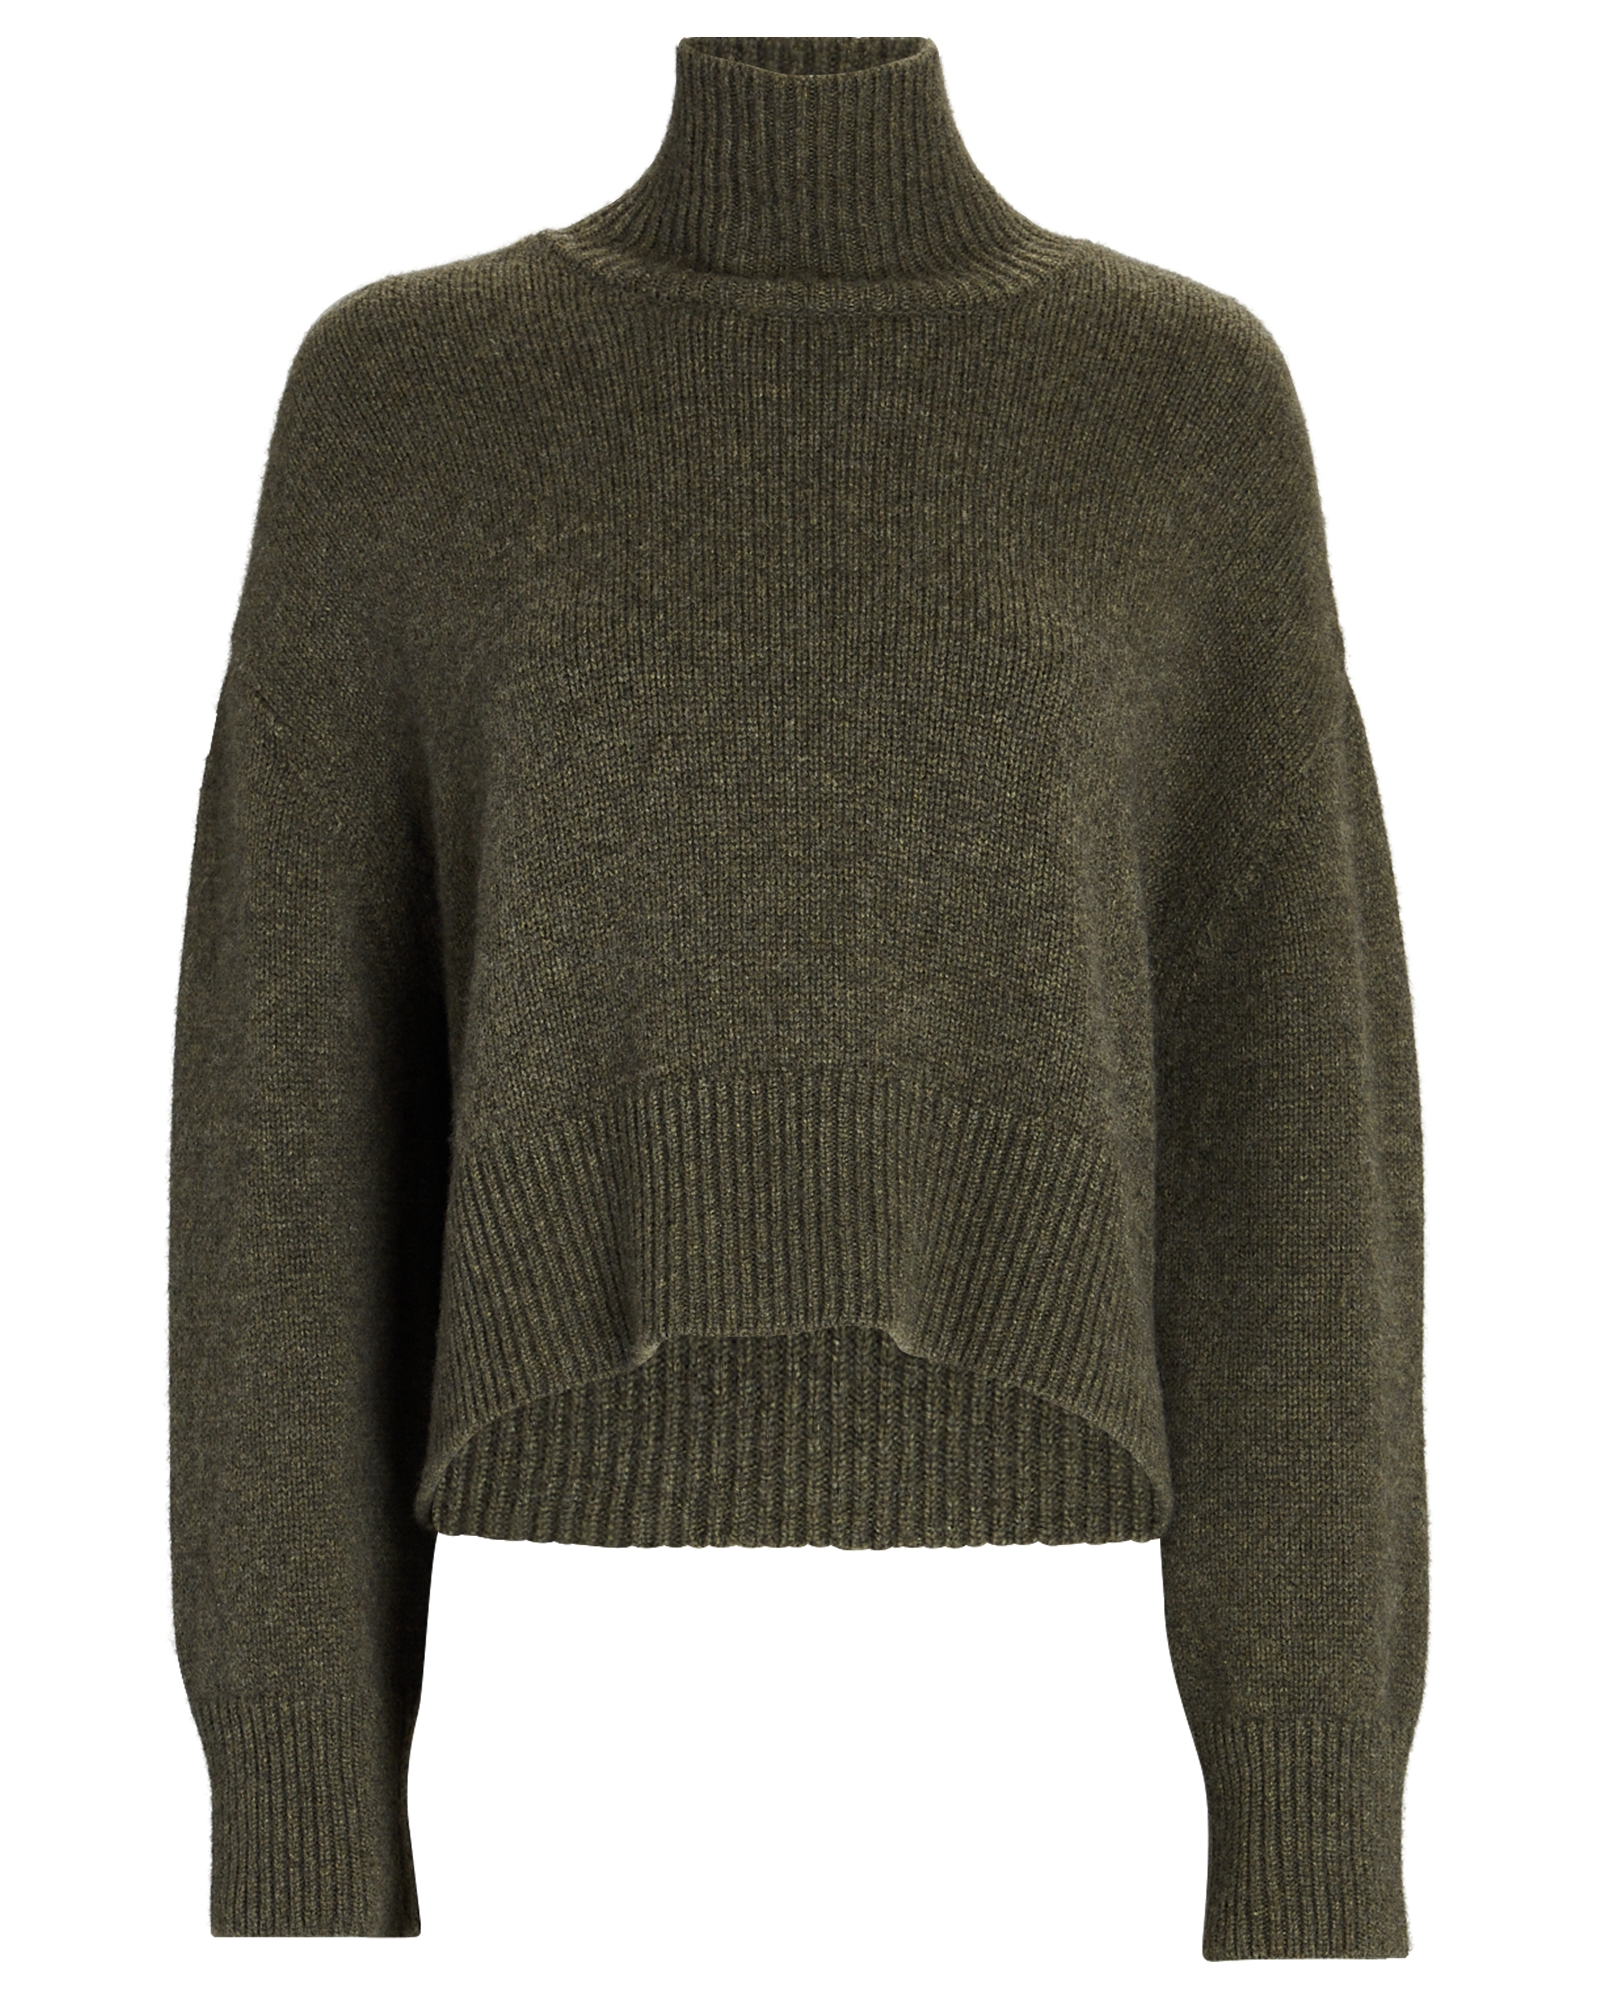 Anine Bing Camilia Cashmere Turtleneck Sweater | INTERMIX®